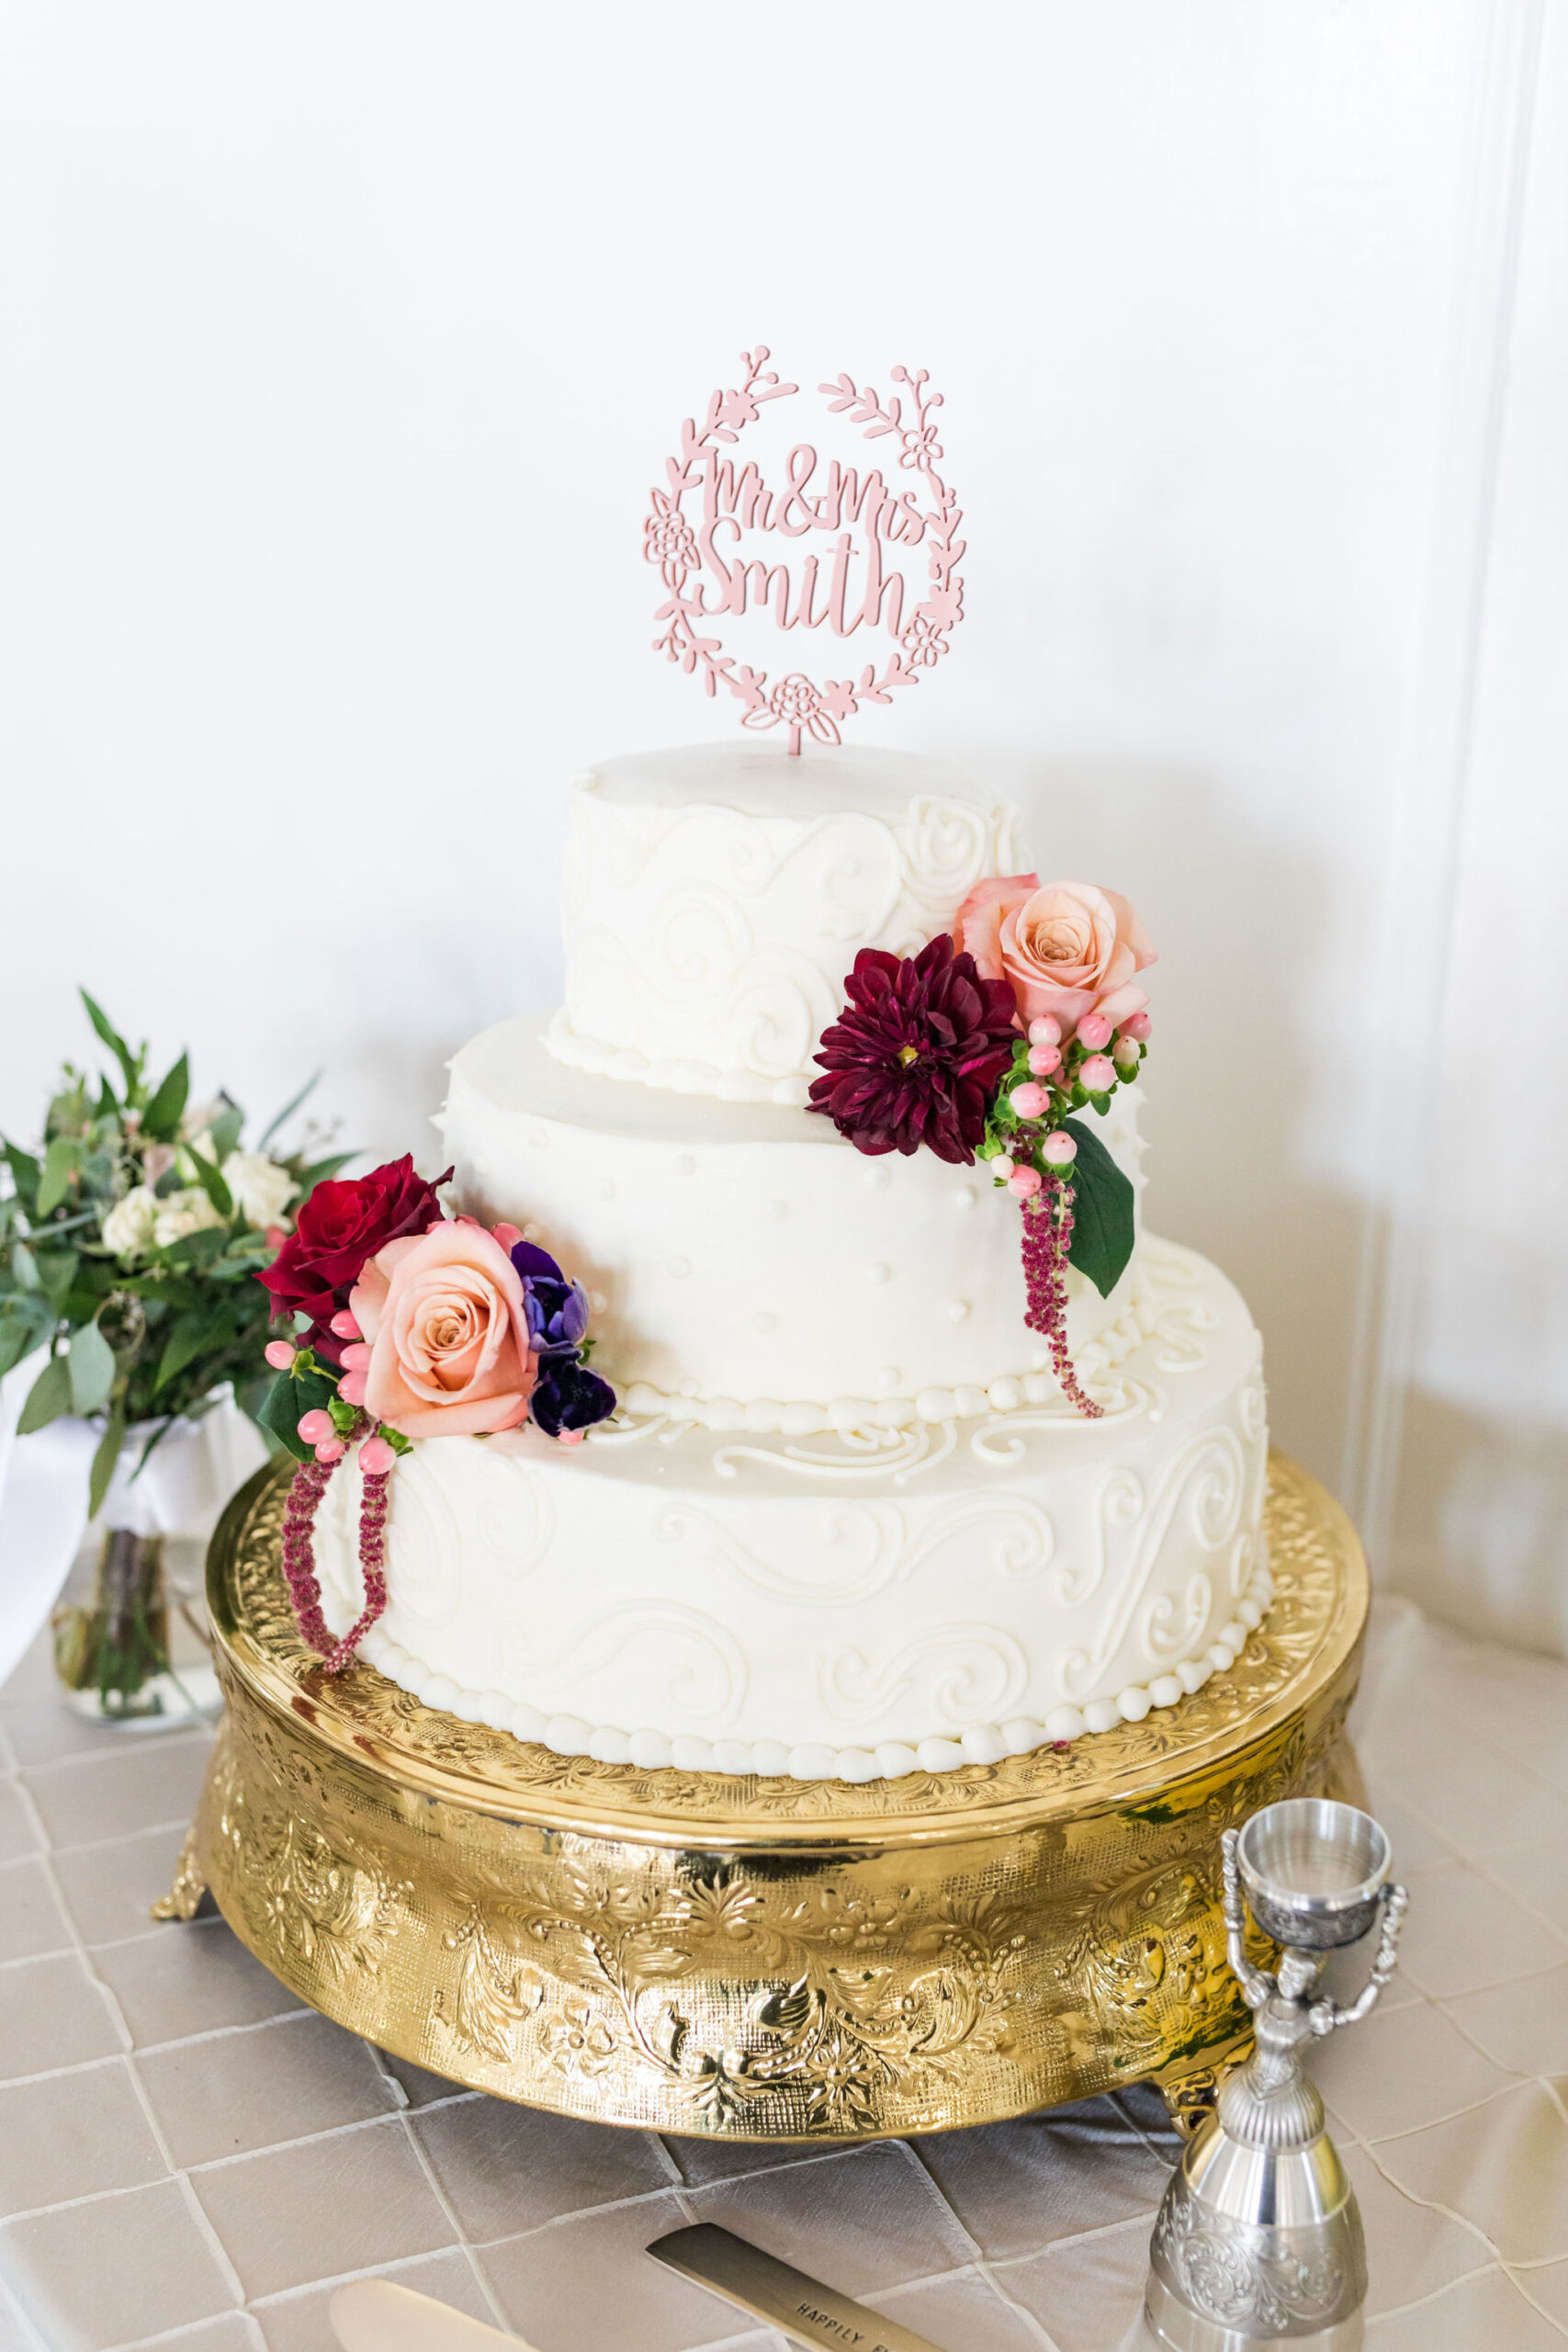 Katherine and Travis' elegant white wedding cake